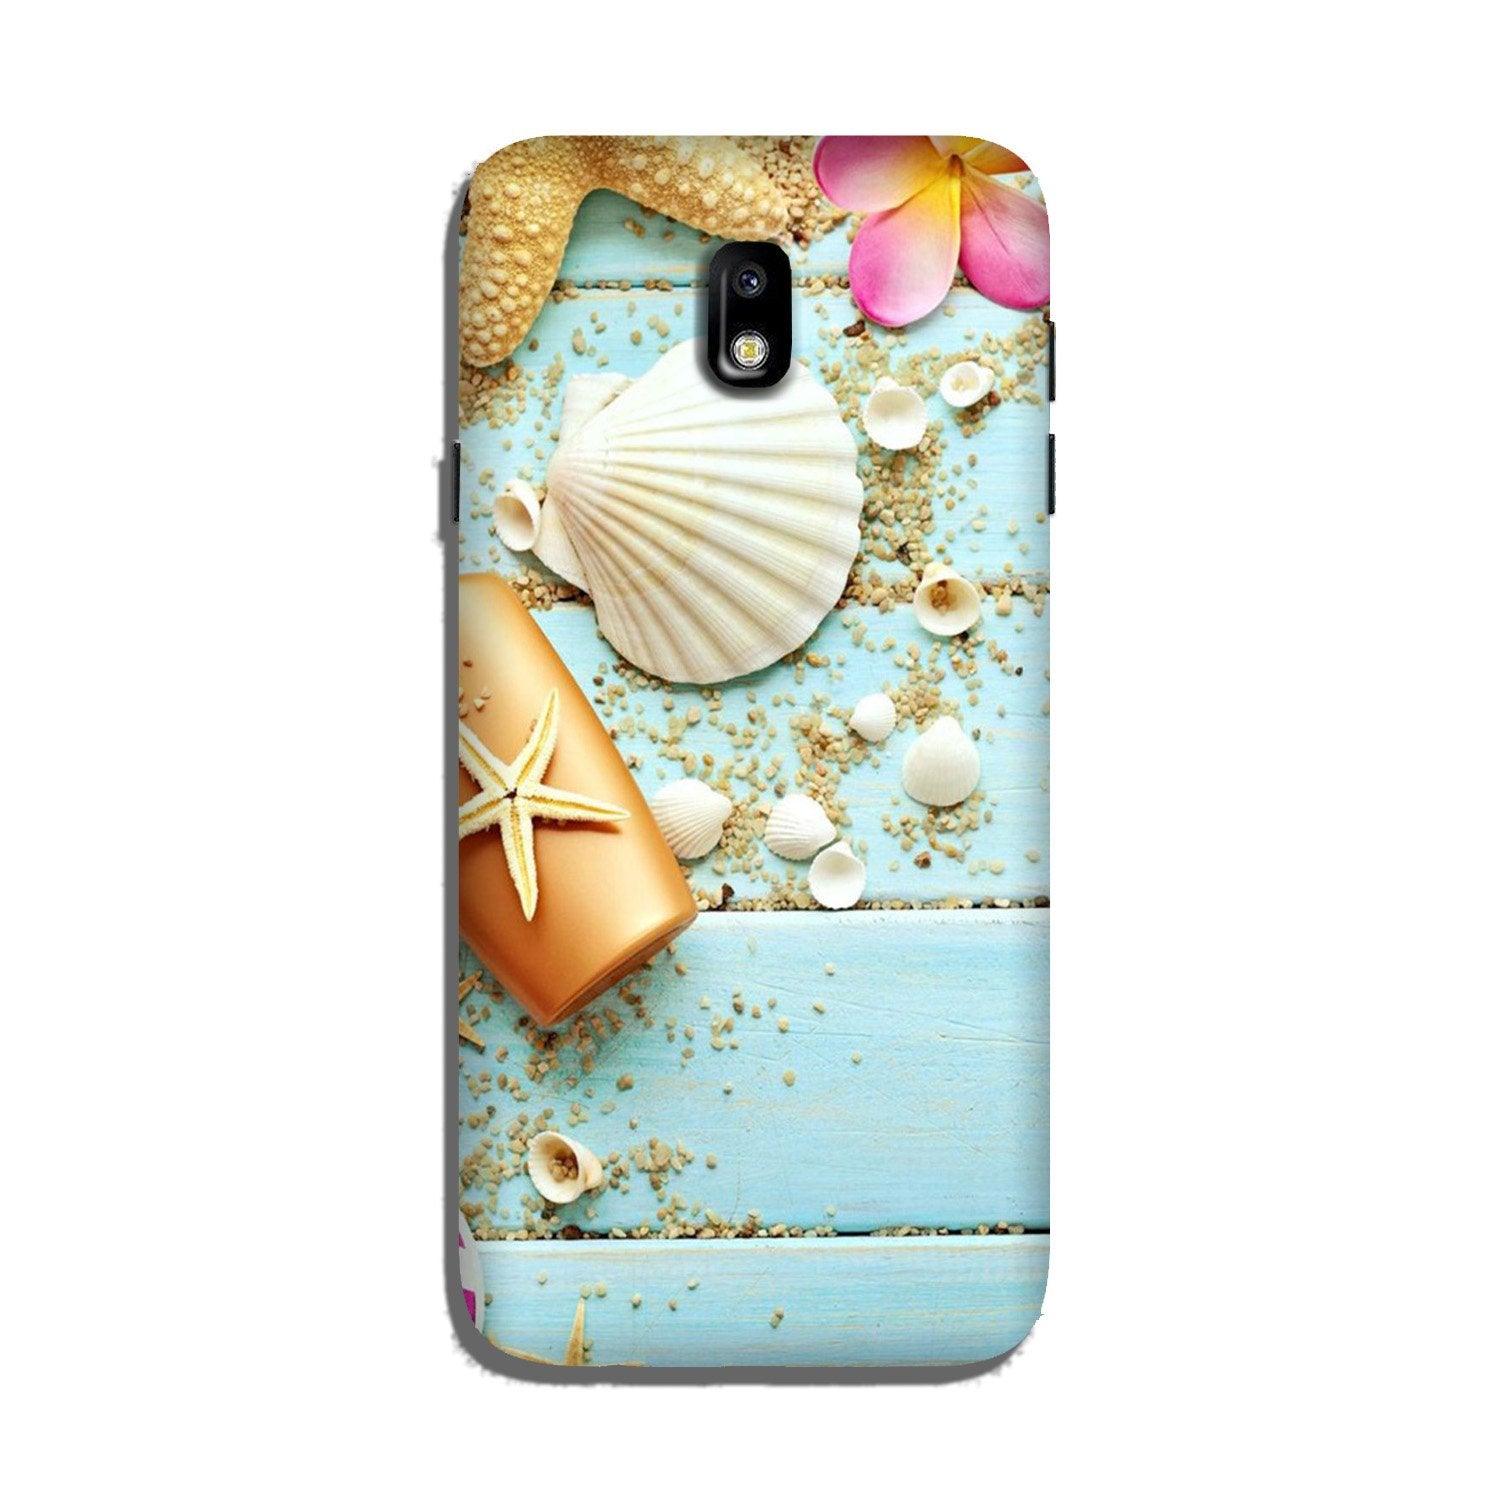 Sea Shells Case for Galaxy J5 Pro